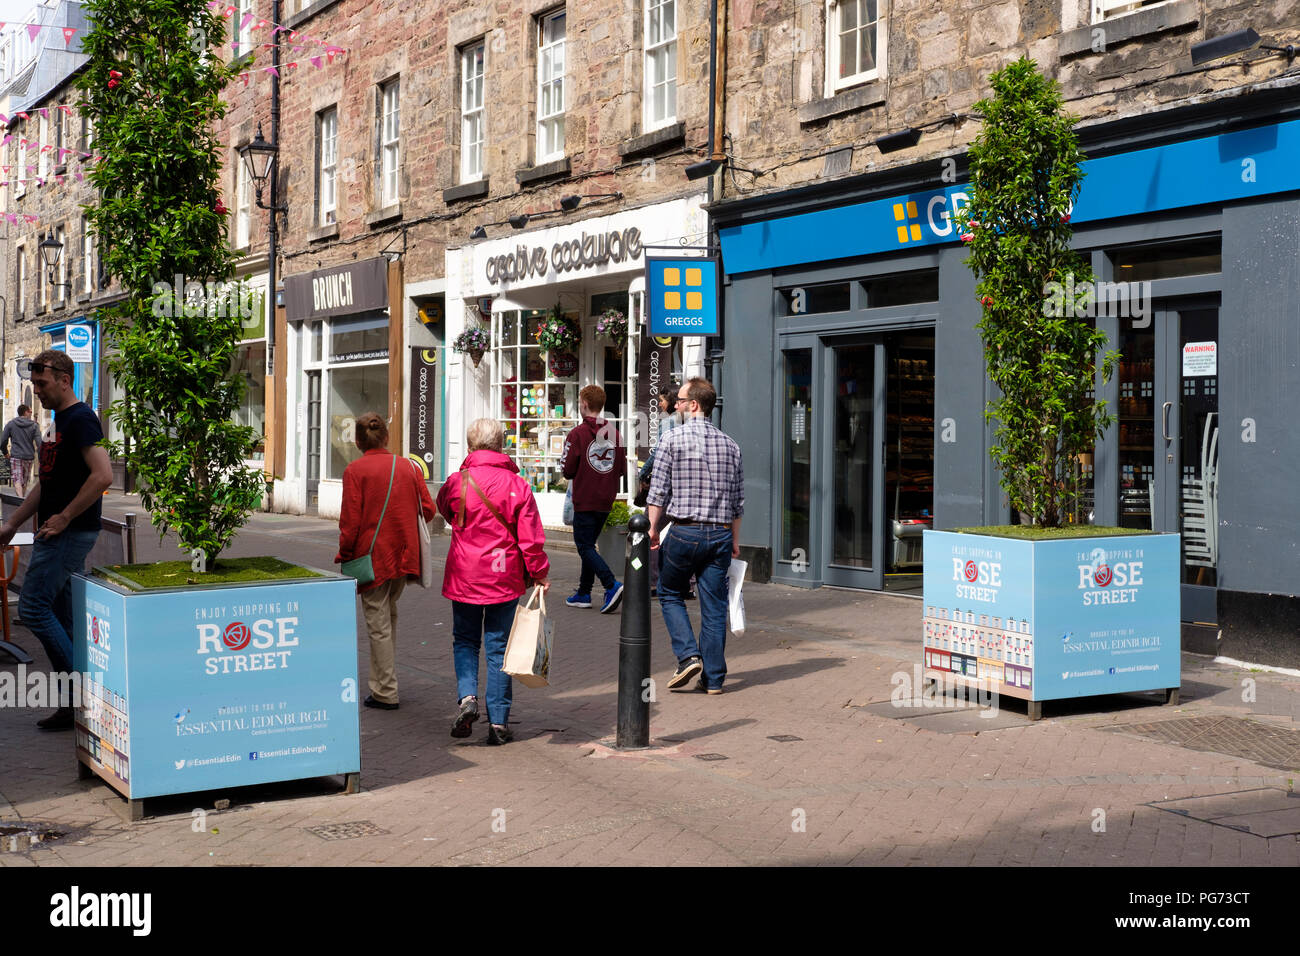 Shoppers in Rose Street, Edinburgh, Scotland. Stock Photo